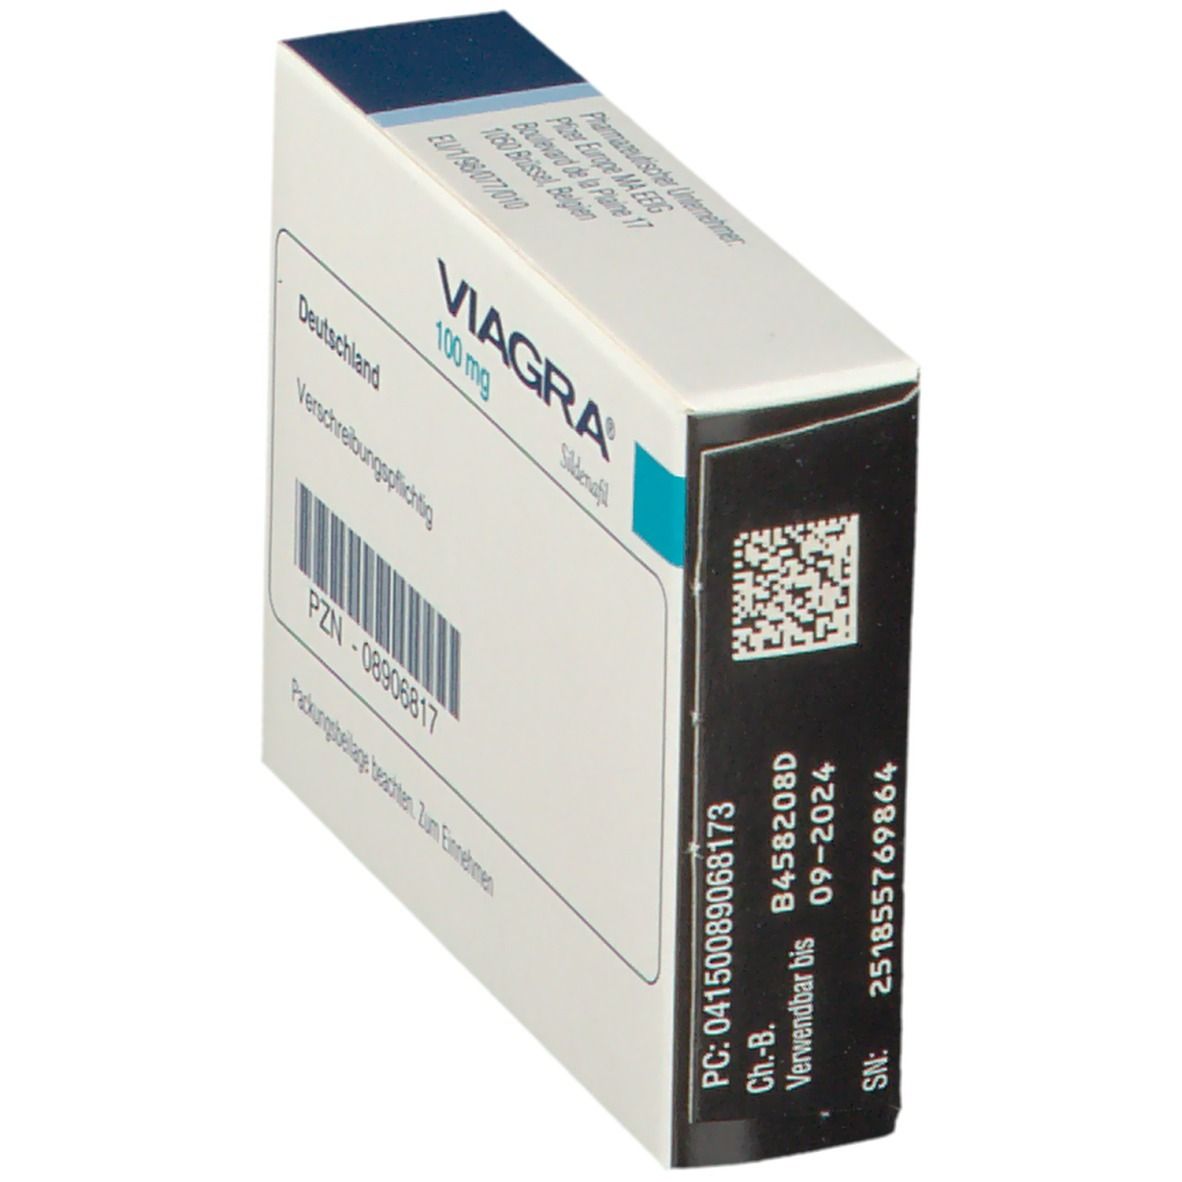 Viagra® 100 mg